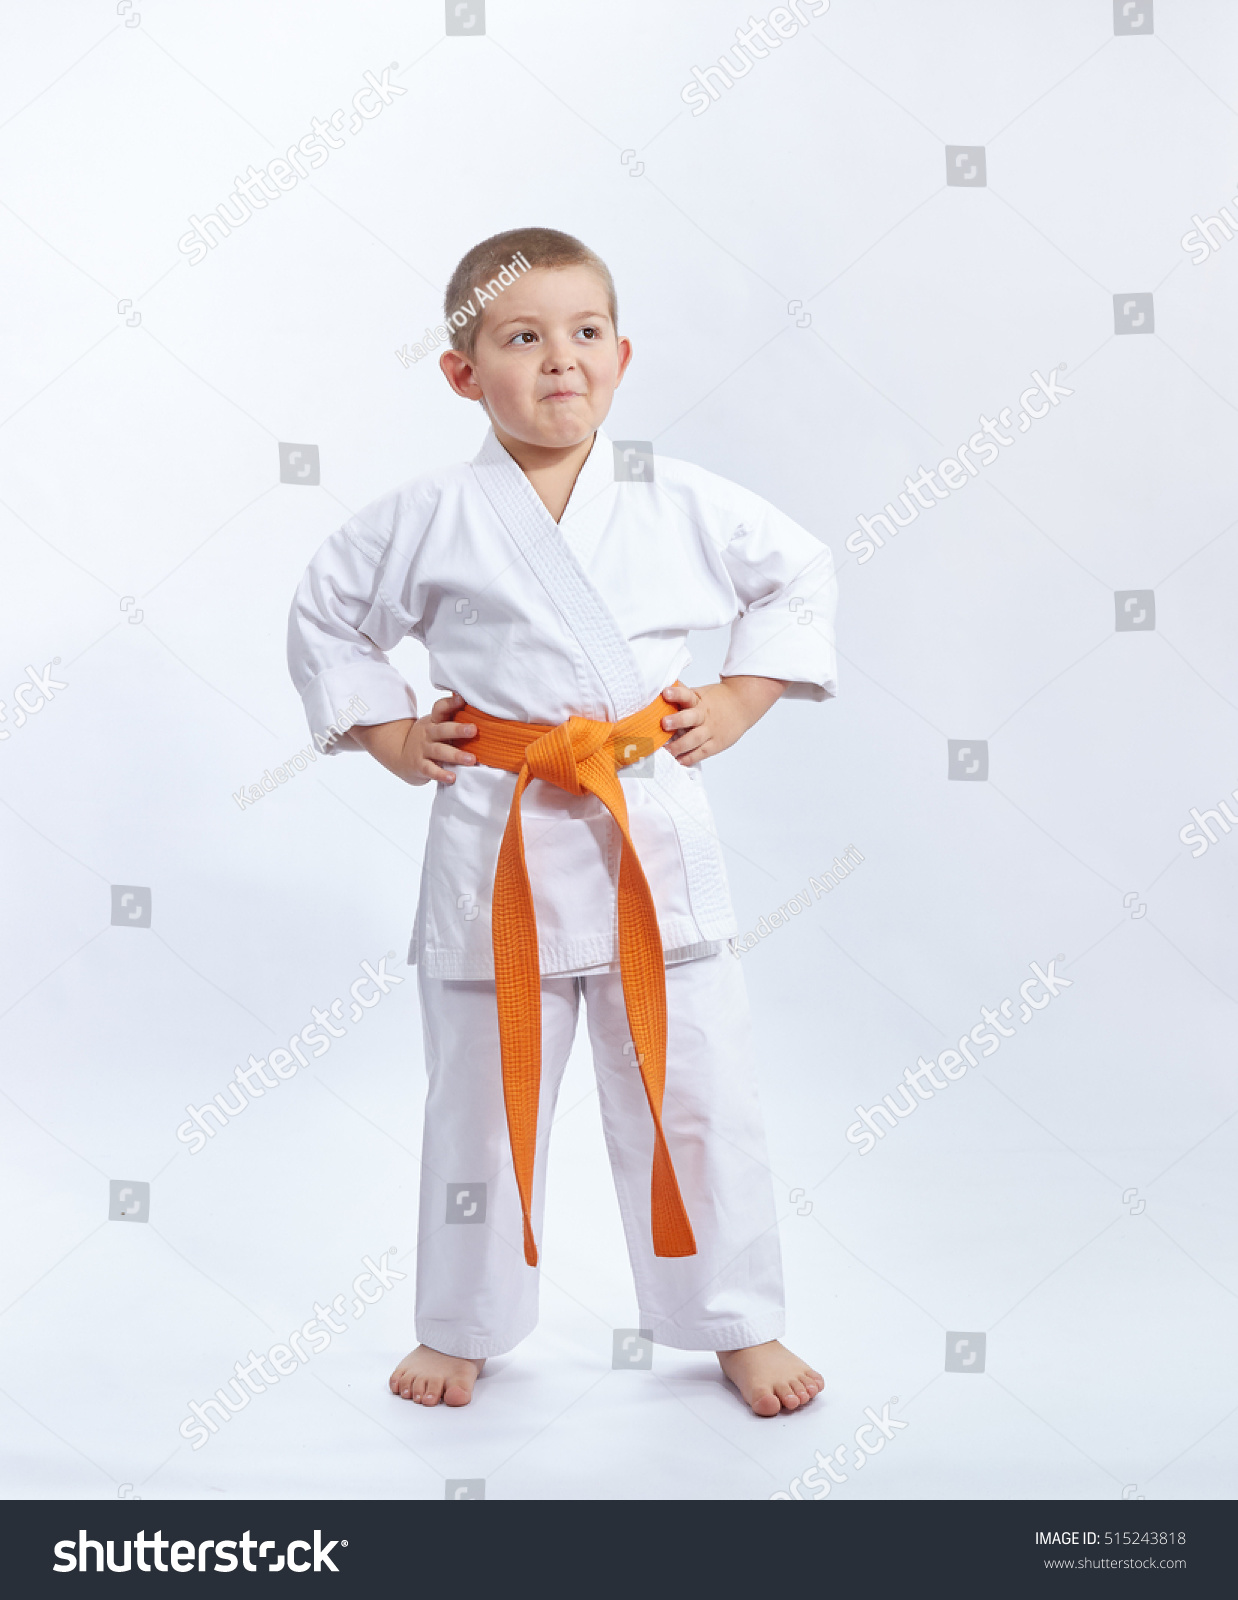 Child in karategi on a white background #515243818